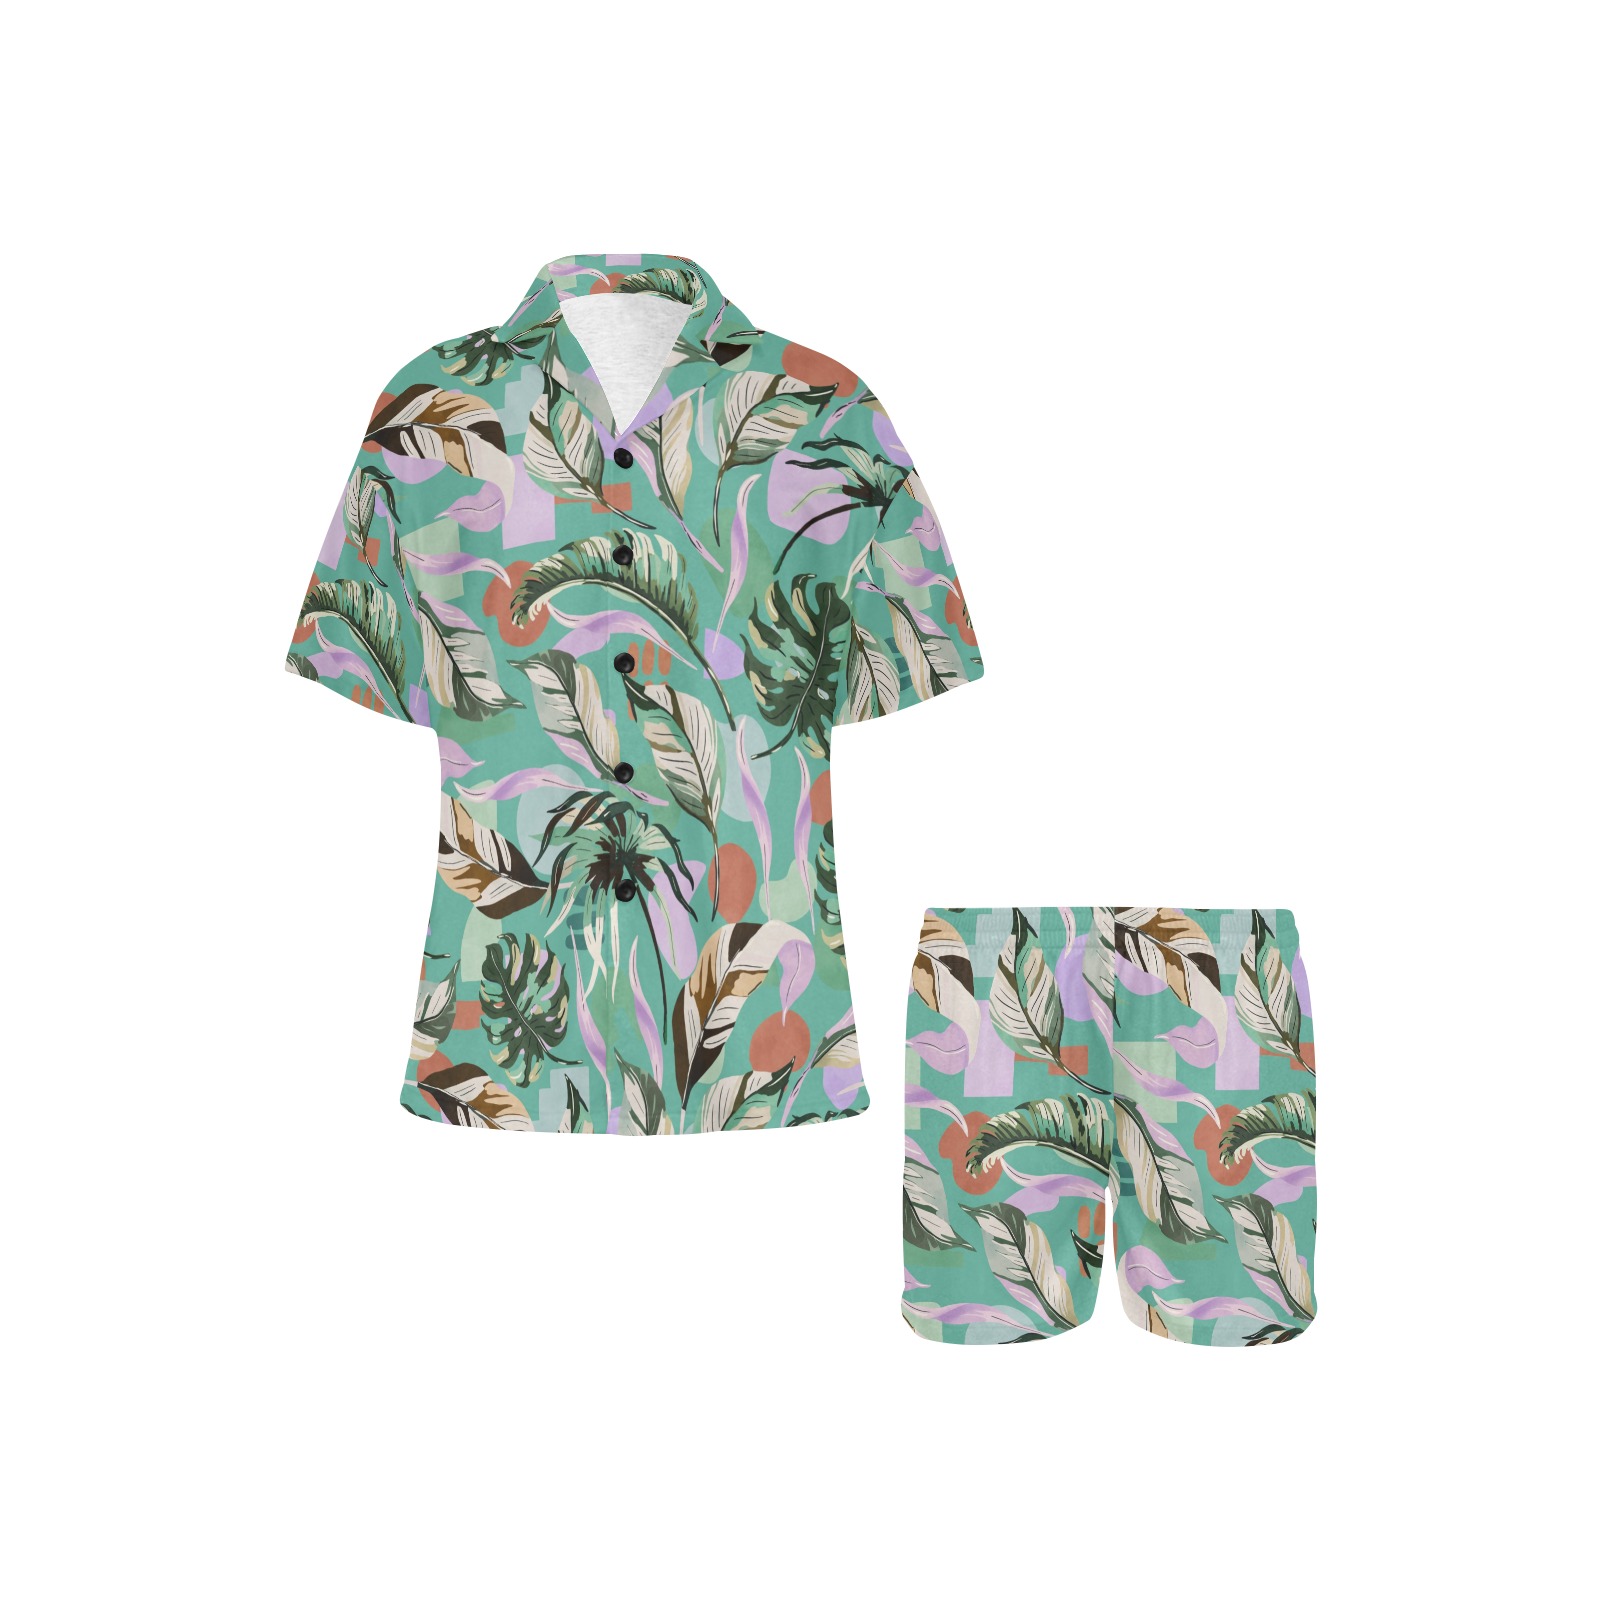 Tropical abstract shapes 58 Women's V-Neck Short Pajama Set